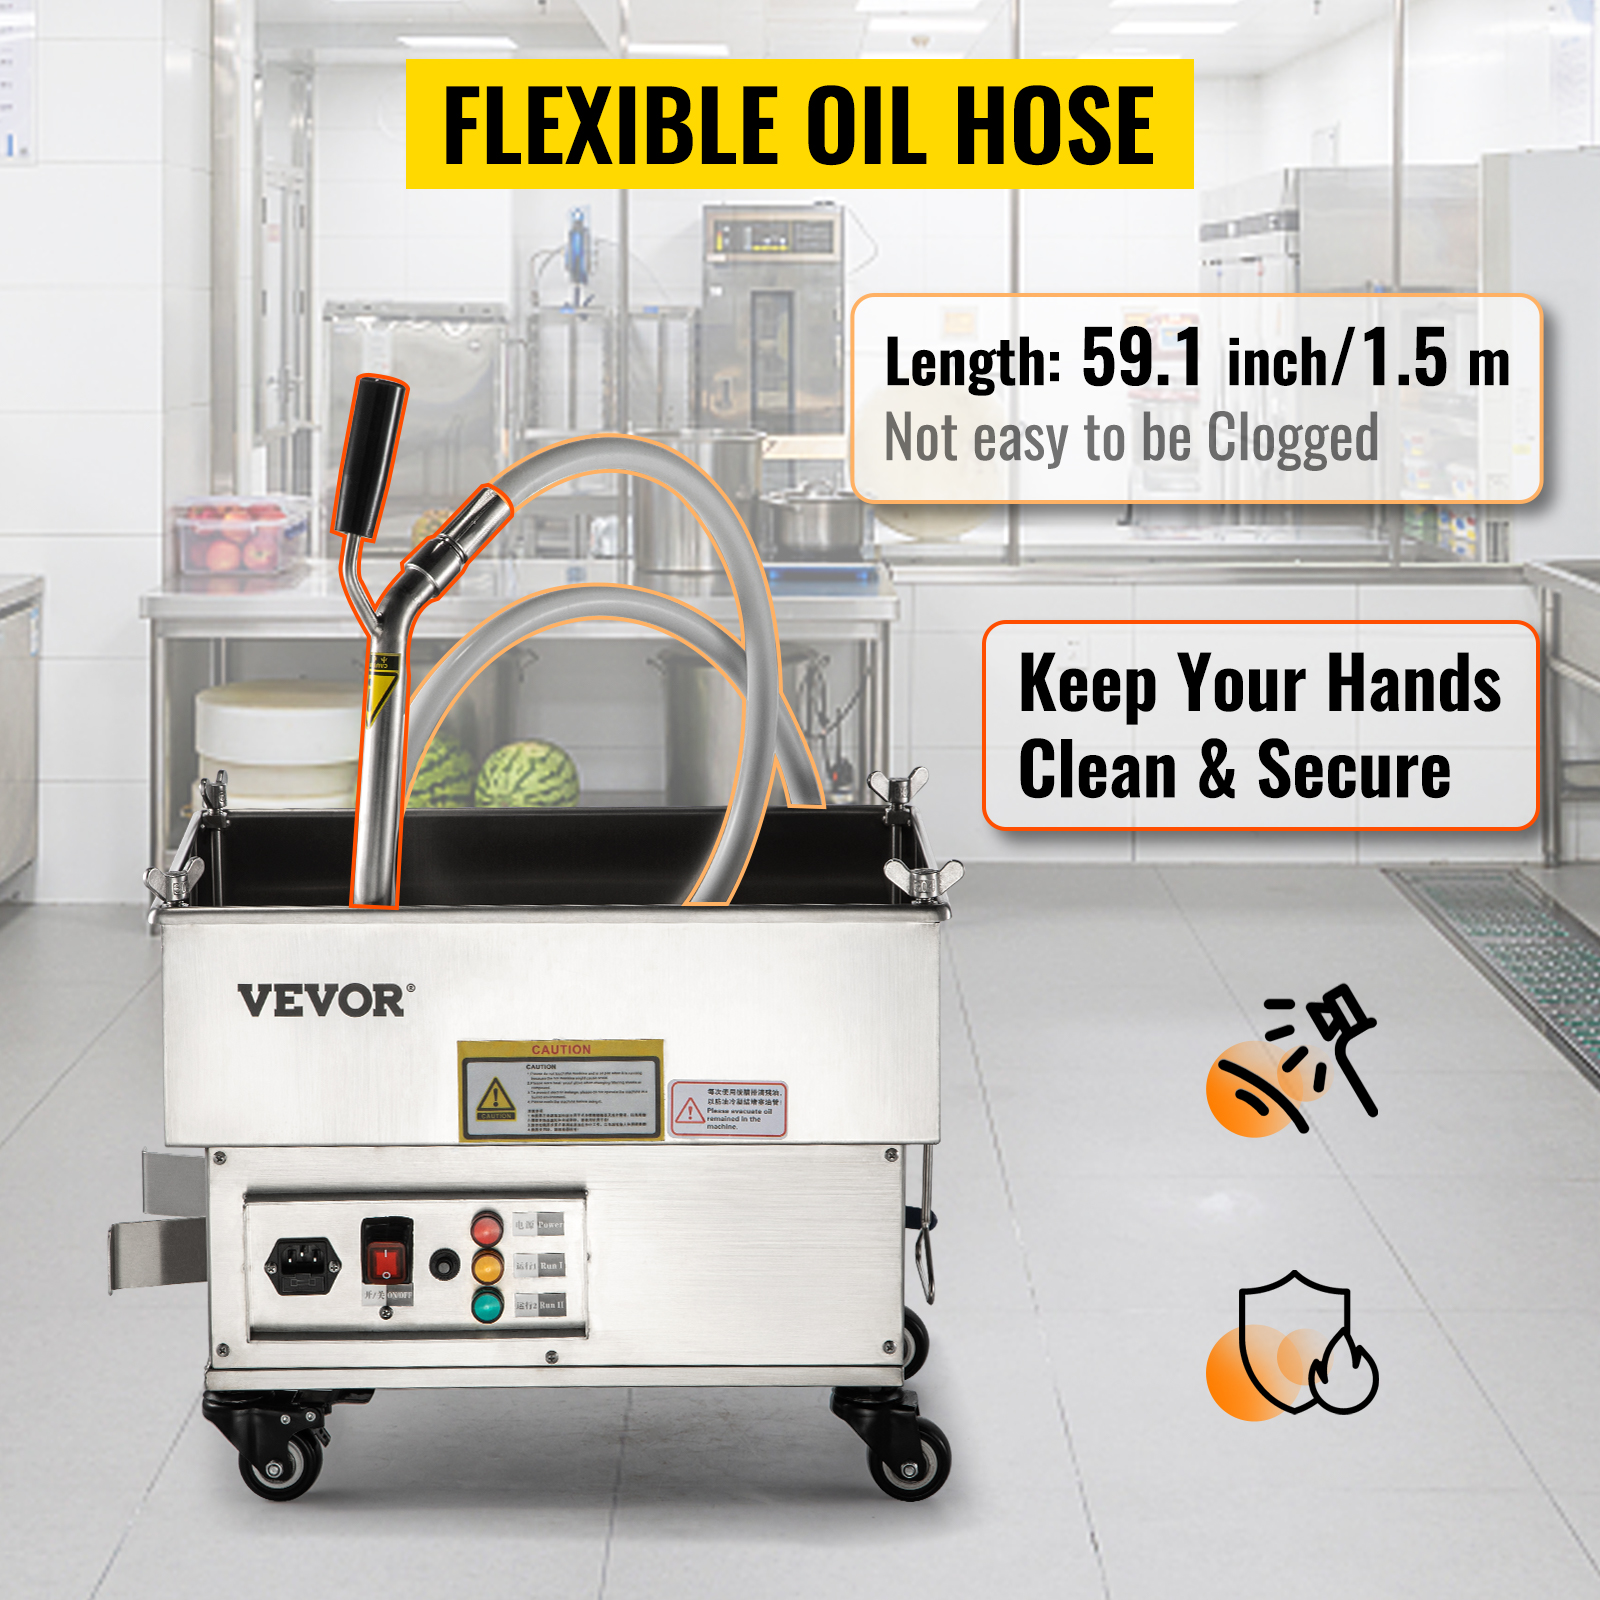 VEVOR Mobile Fryer Filter, 44 LBS/22 L/5.8 Gal Capacity, 300W Oil